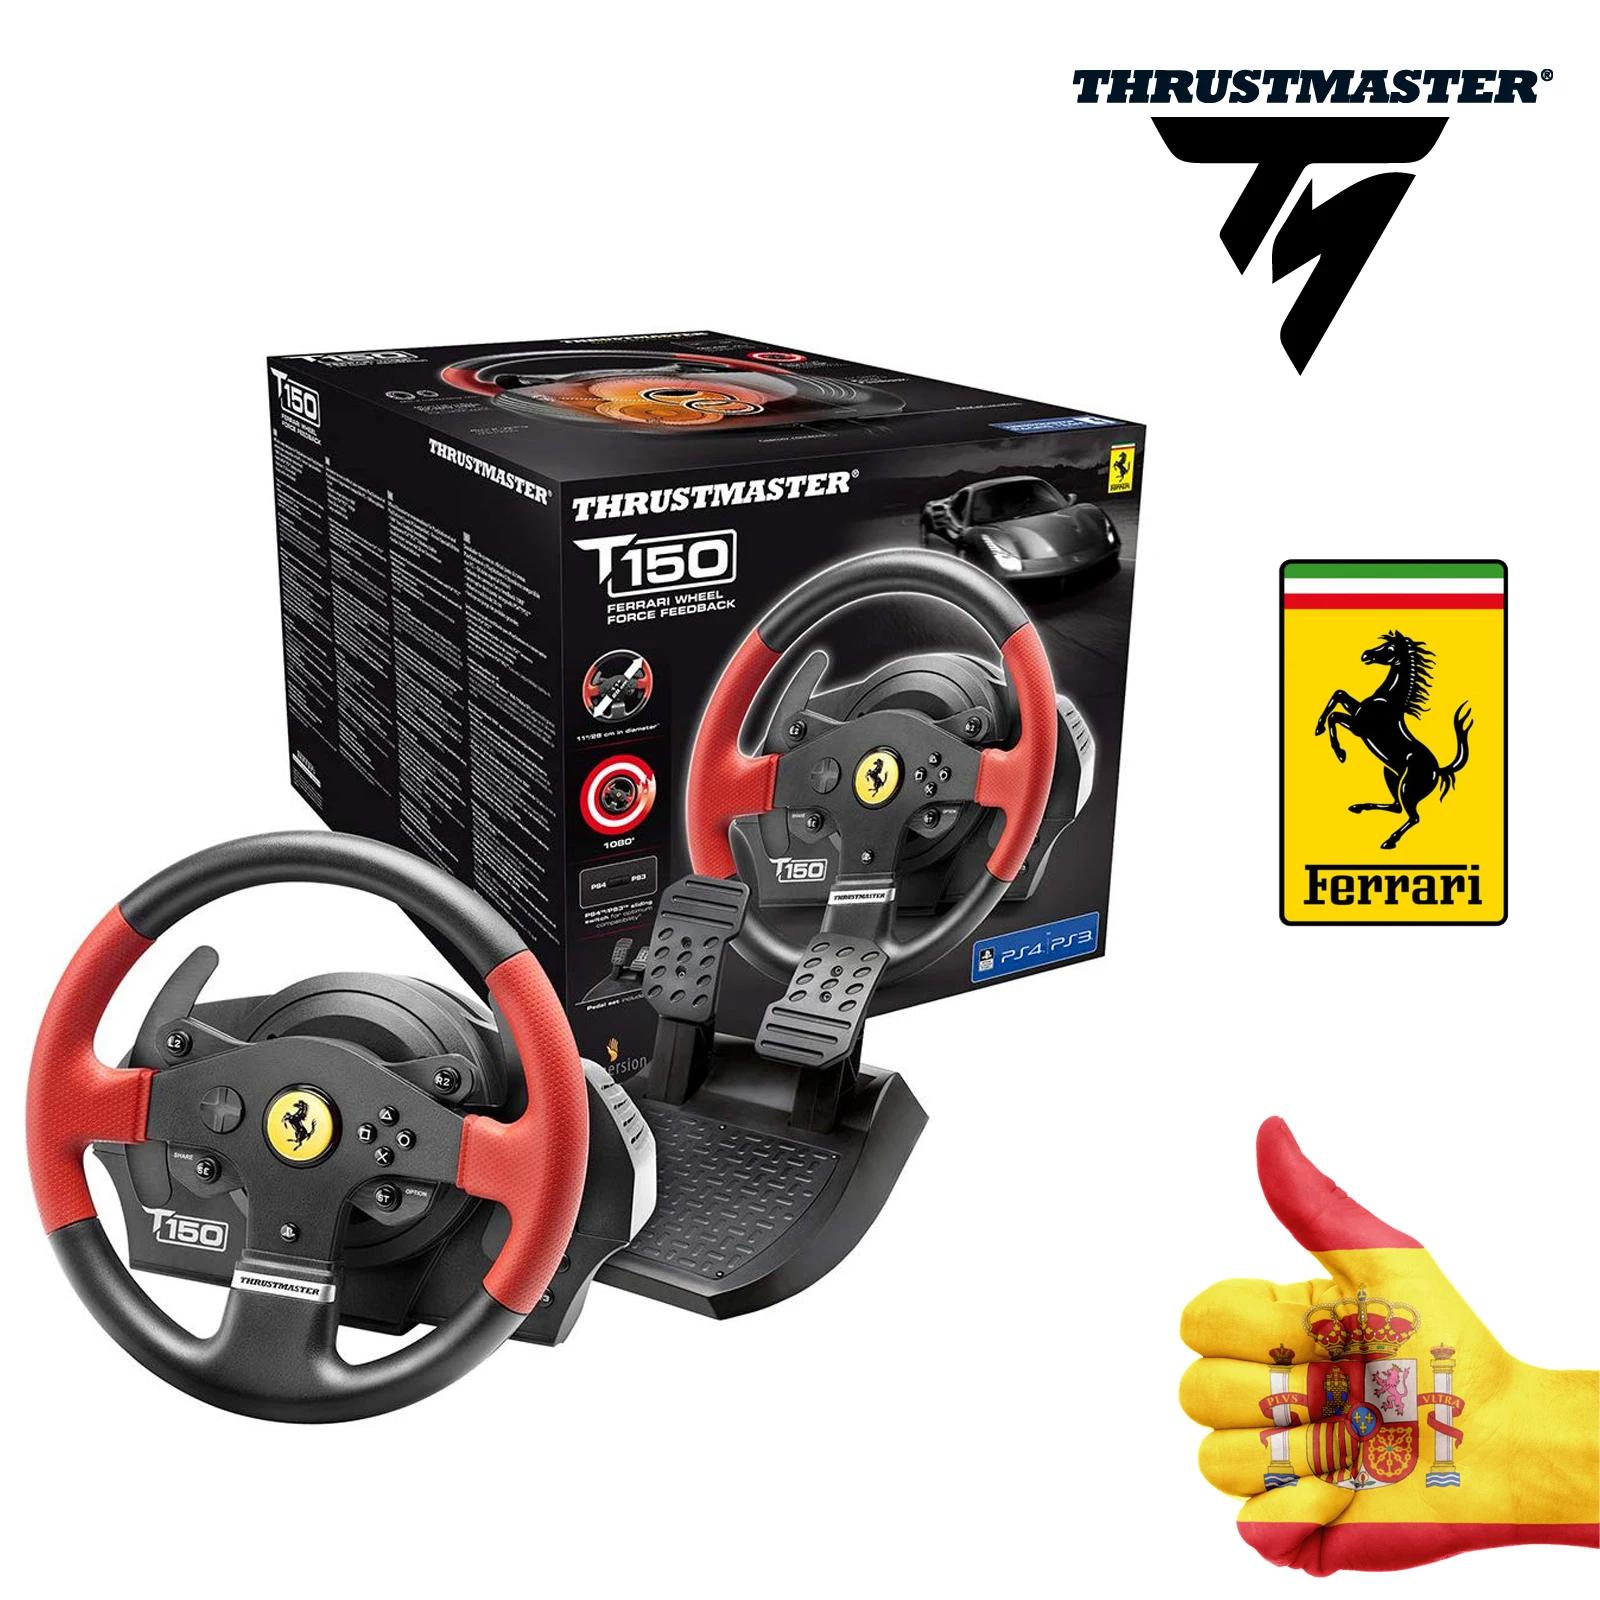 thrustmaster t150 ferrari wheel force feedback - Does Thrustmaster t80 Ferrari have force feedback